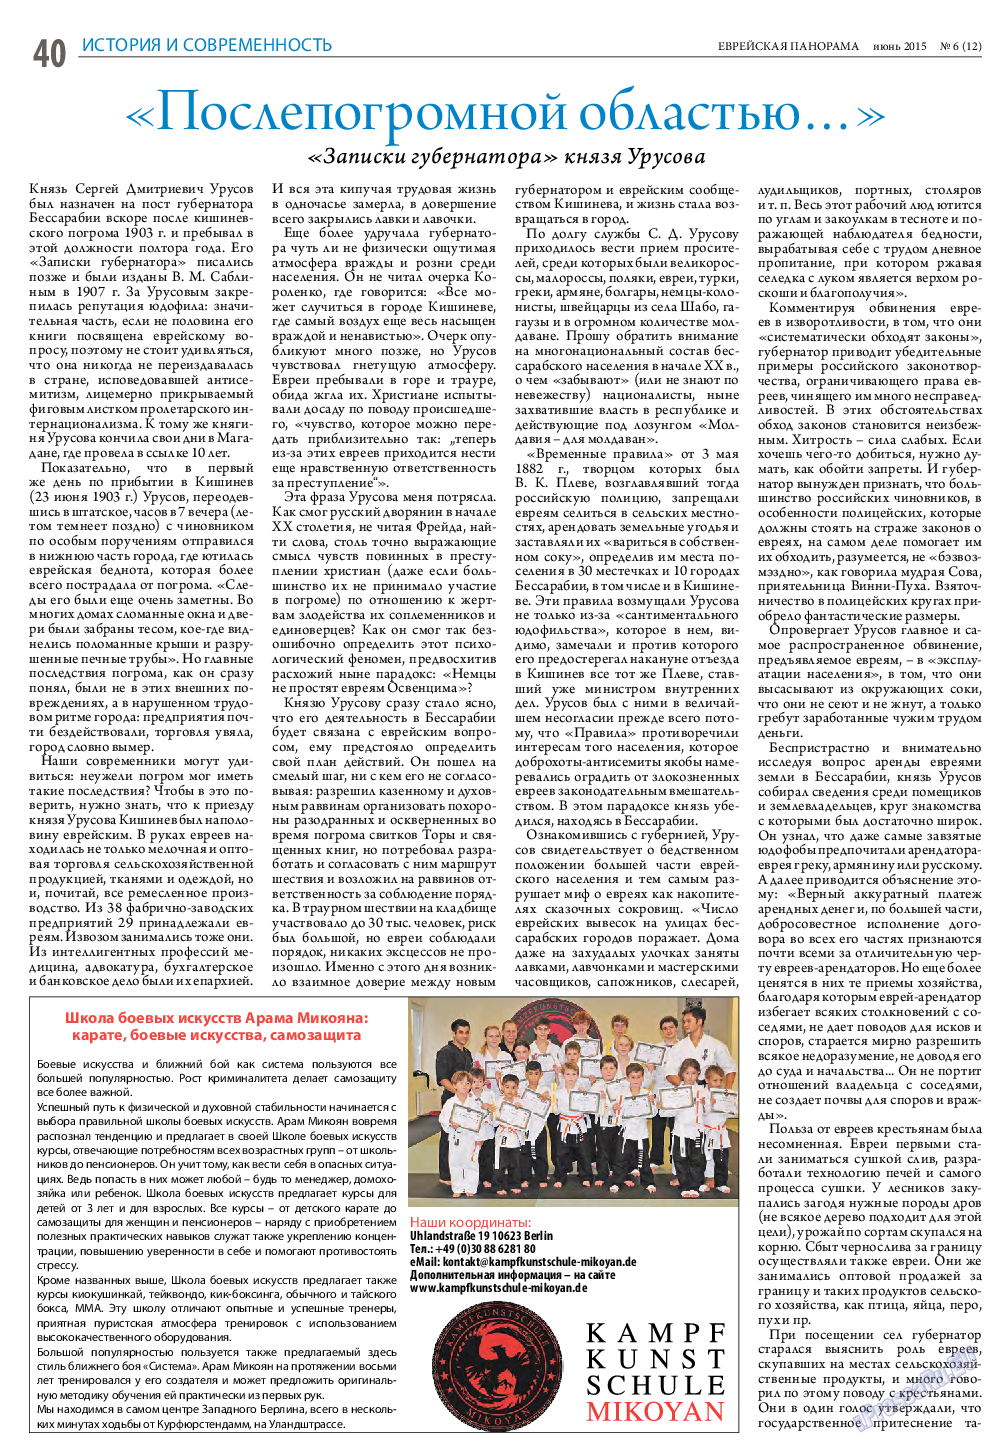 Еврейская панорама, газета. 2015 №6 стр.40